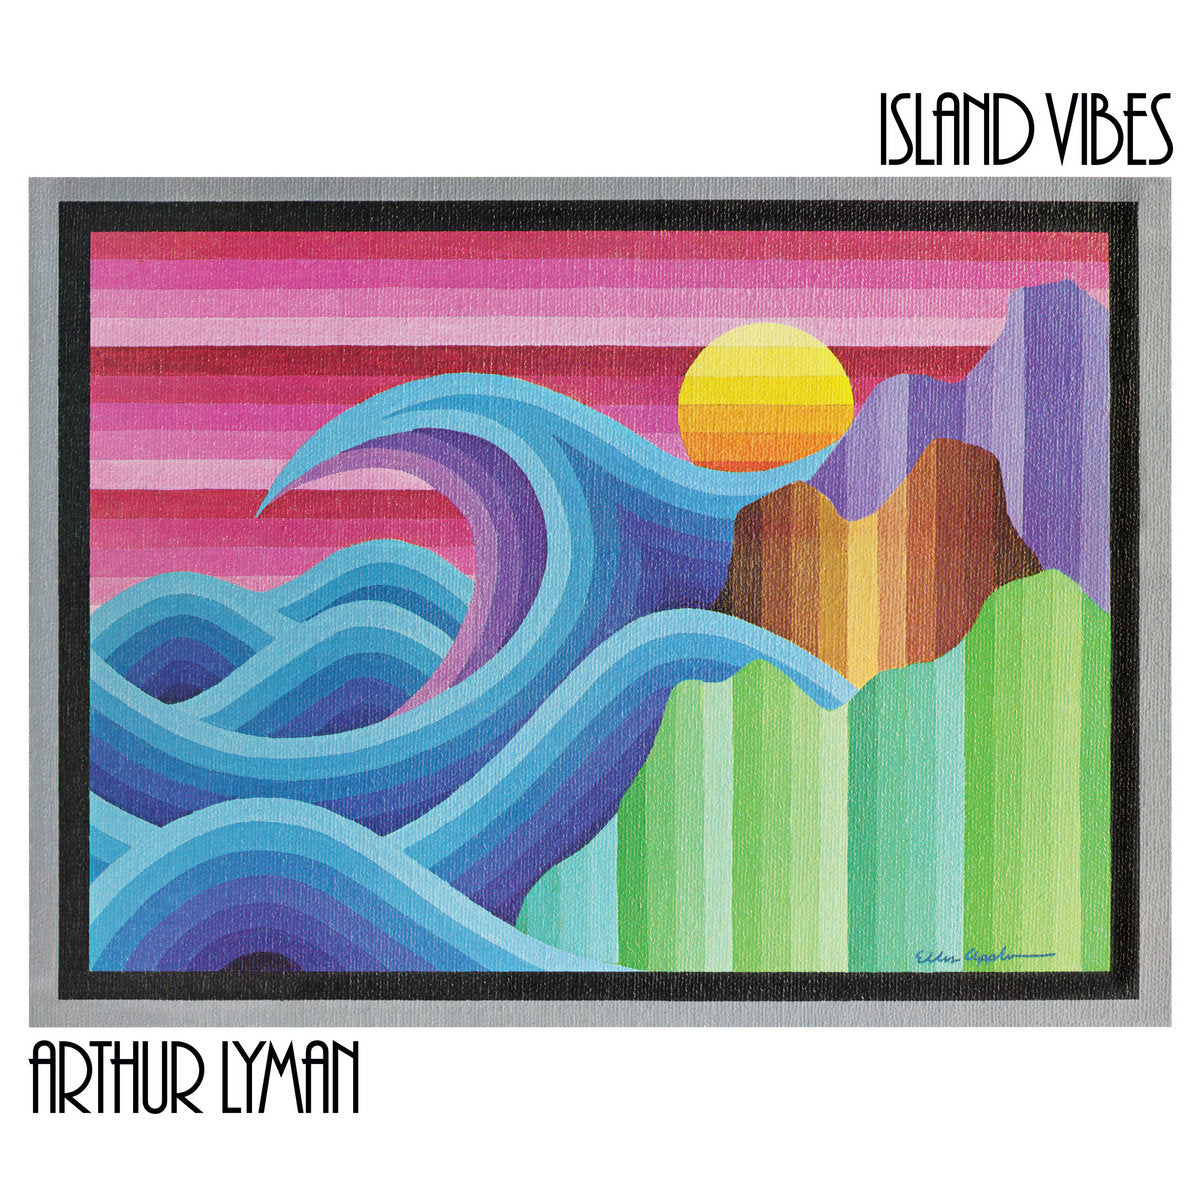 Island Vibes (New LP)